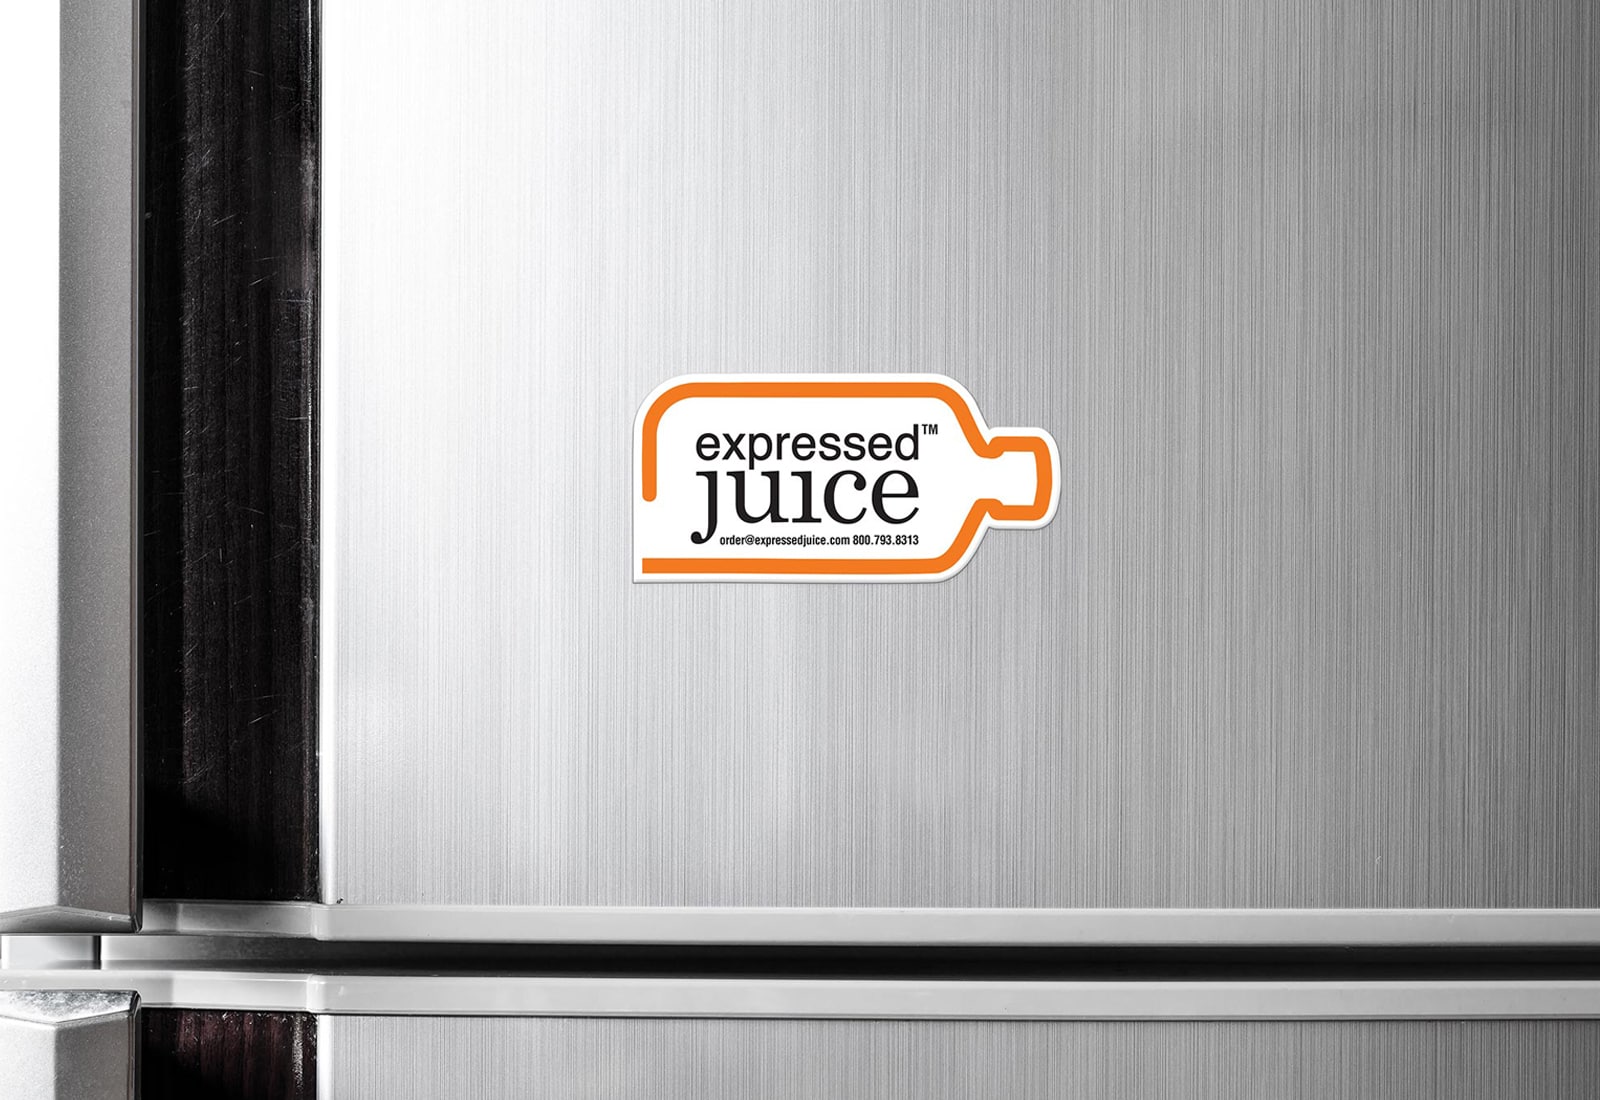 Expressed Juice magnet on refrigerator door of the sideways bottle outline in orange with black and white logo inside.